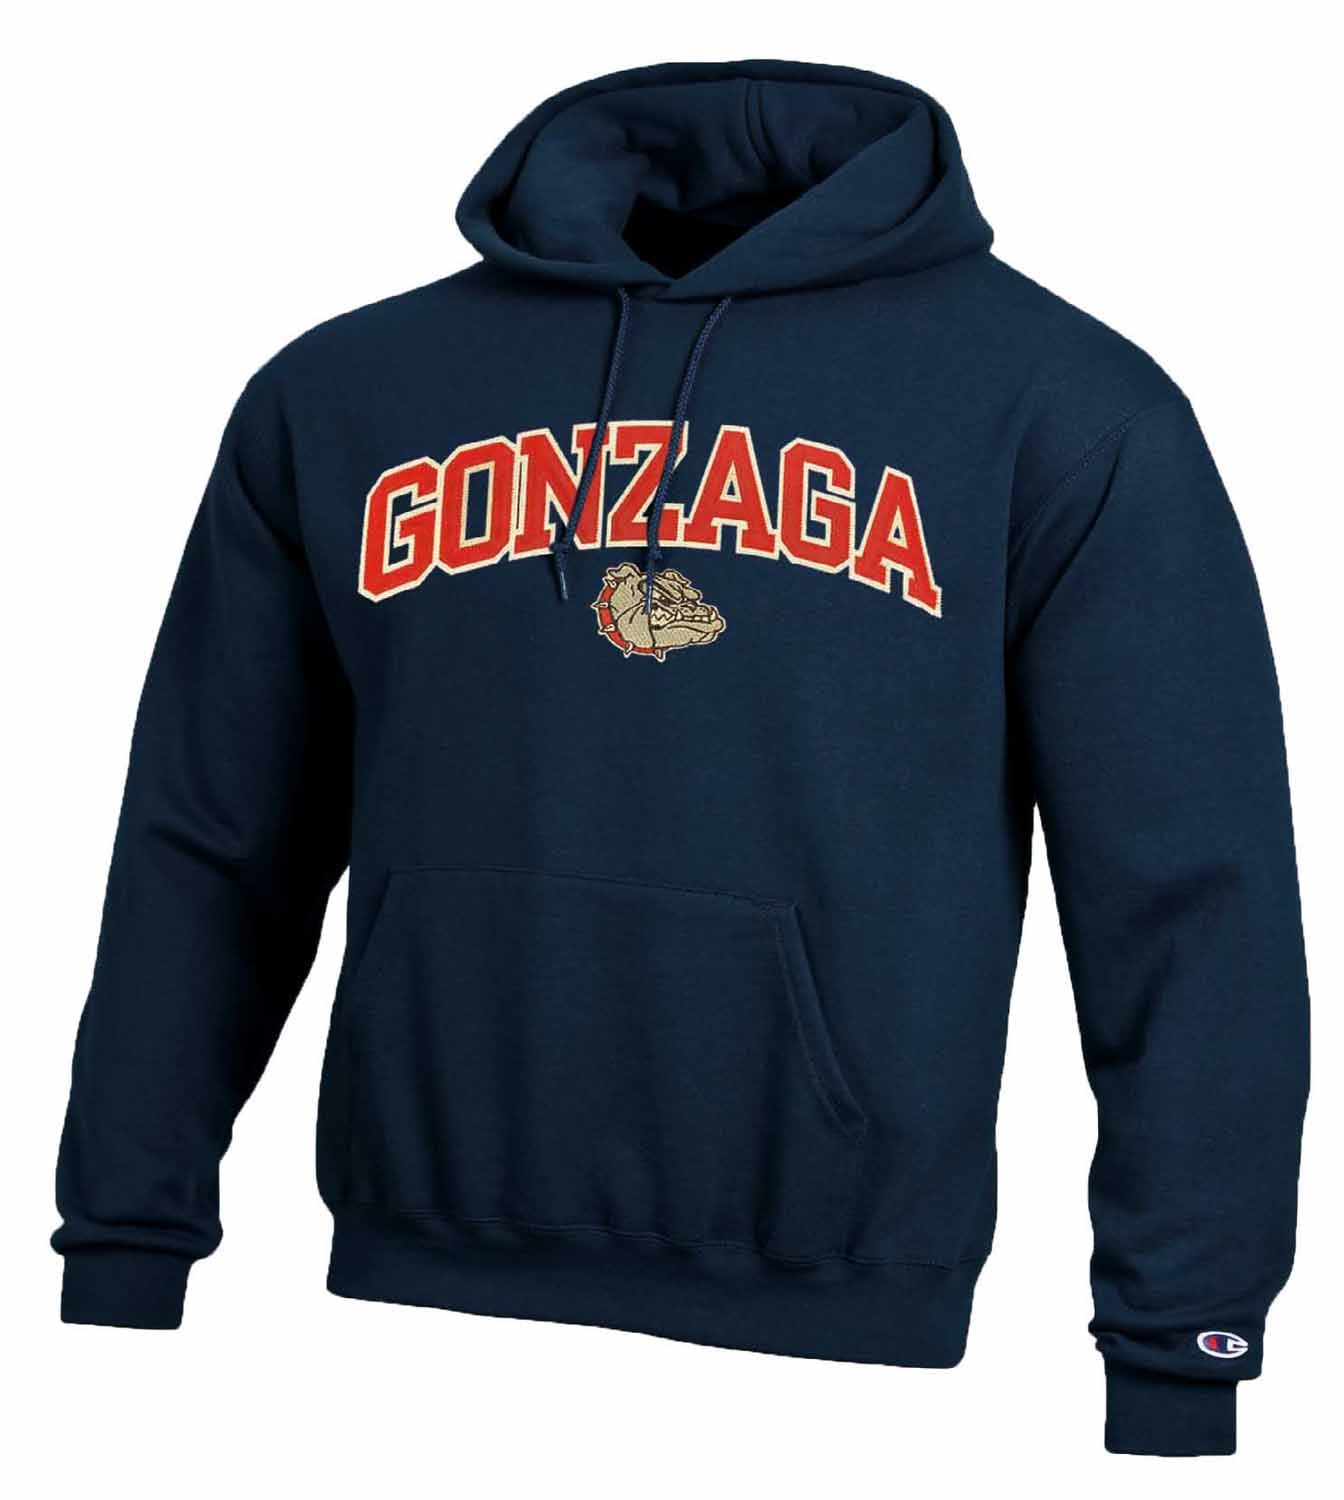 Gonzaga Bulldogs Champion Adult Tackle Twill Hooded Sweatshirt - Navy